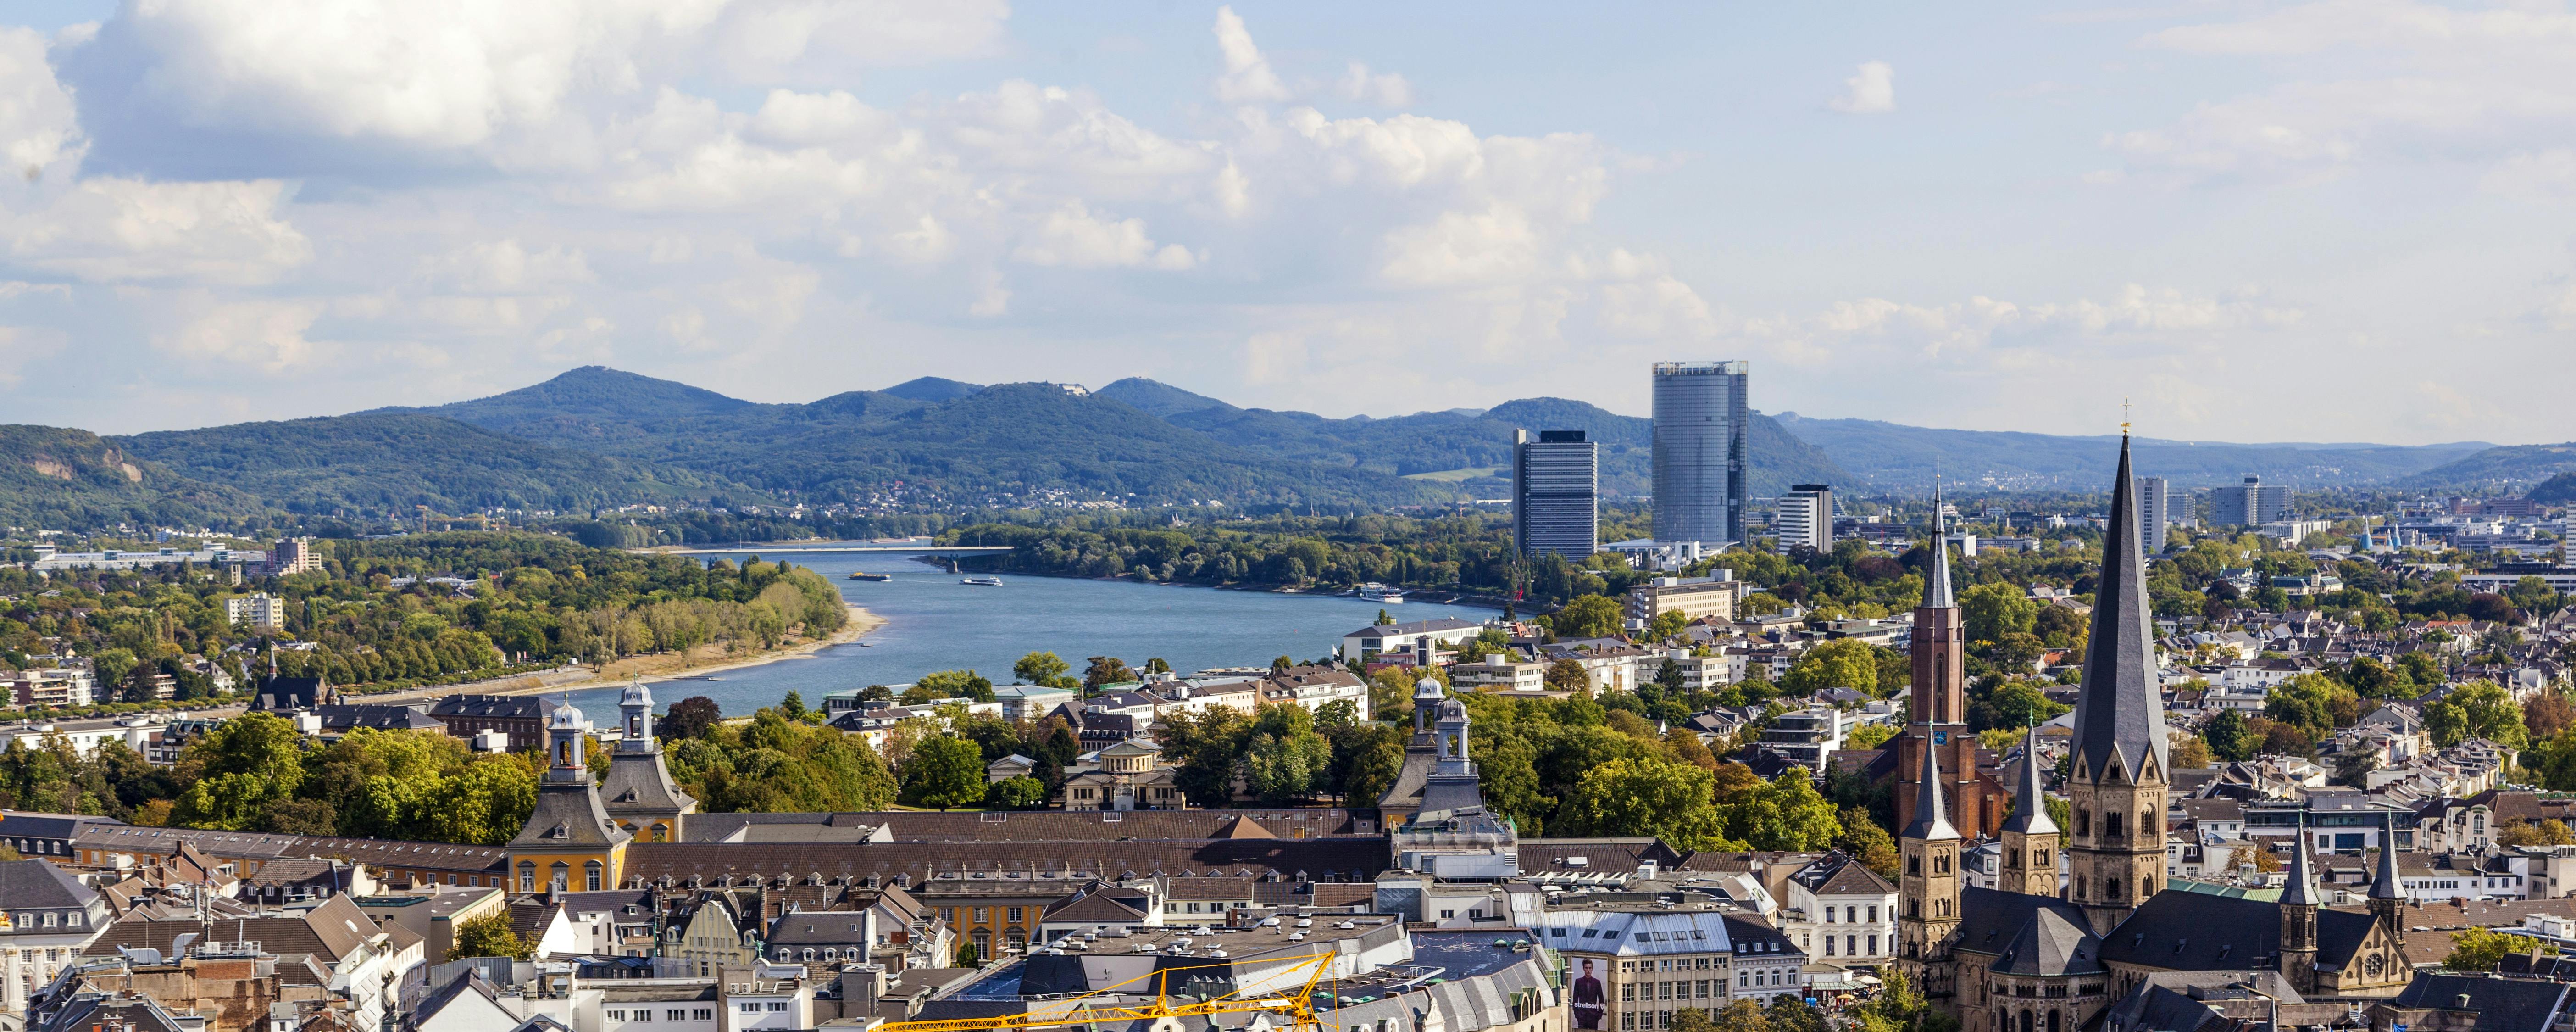 Escape Tour zelfgeleide, interactieve stadsuitdaging in Bonn